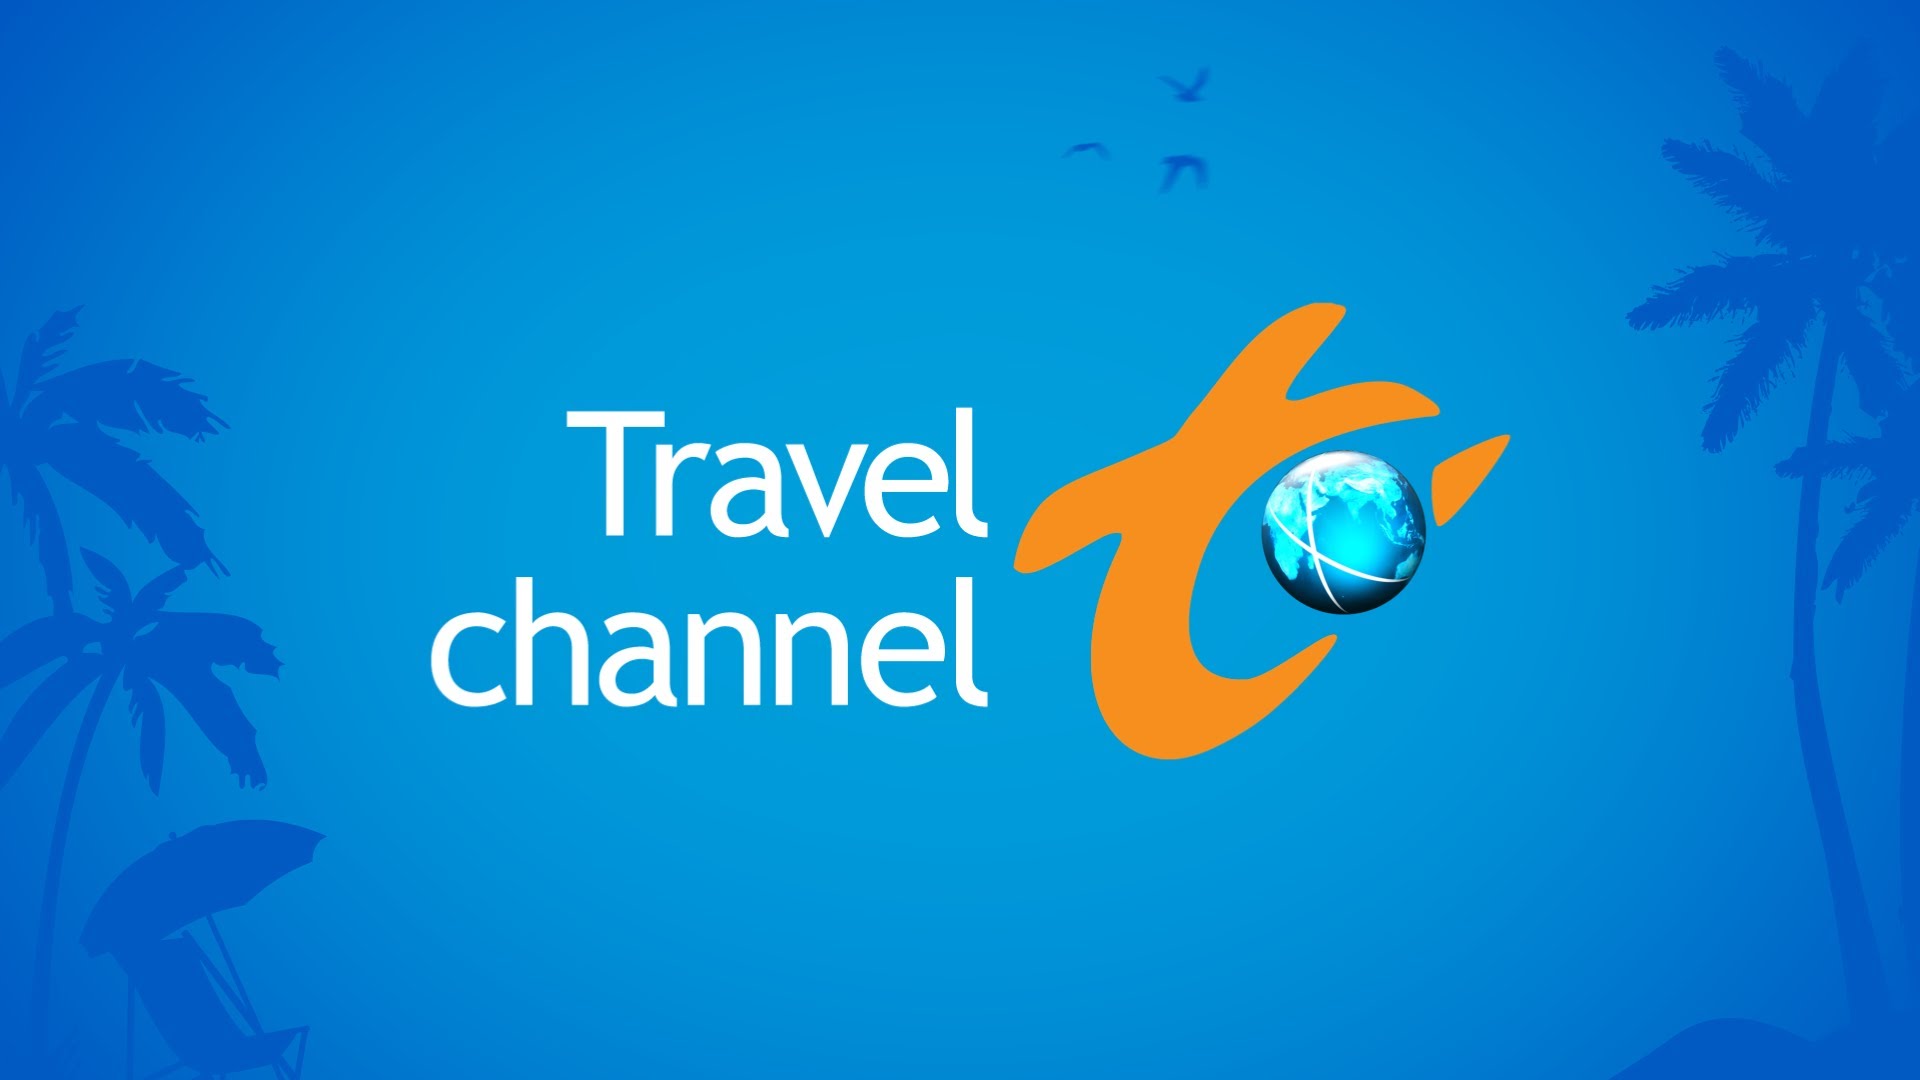 Traveling channel. Travel канал. Travel channel логотип. Телеканал путешествия. Травел Чанел лого.